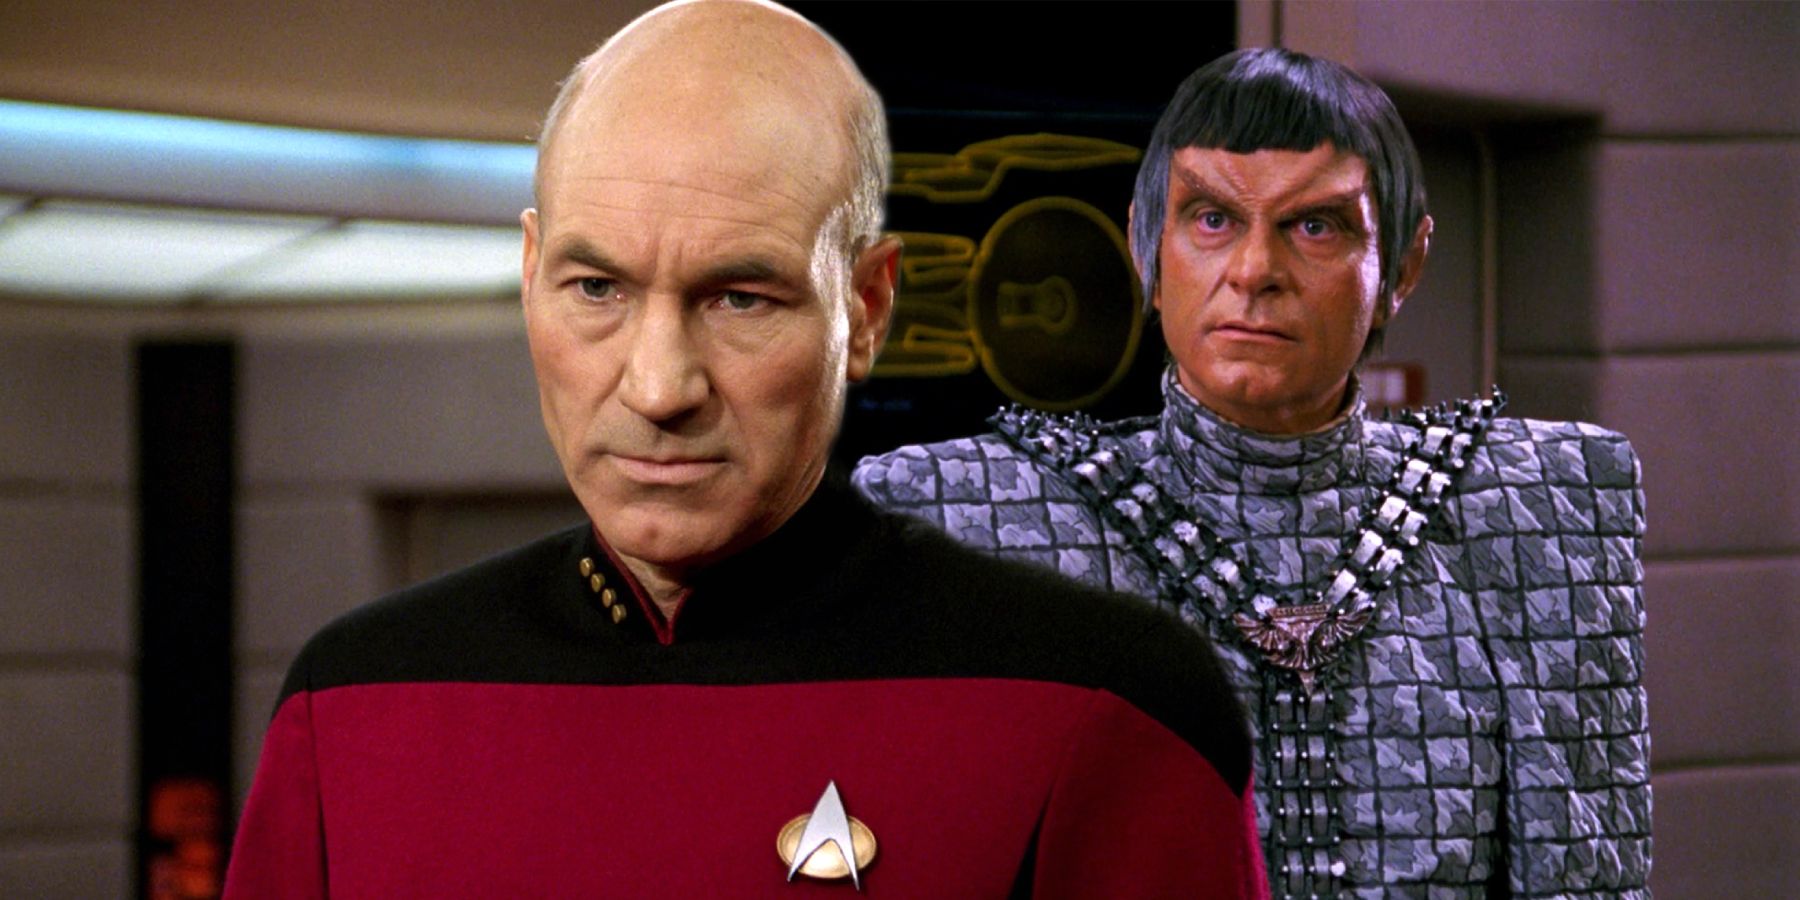 TNG’s Starfleet & Romulan Alliance Plan Would’ve Changed Star Trek